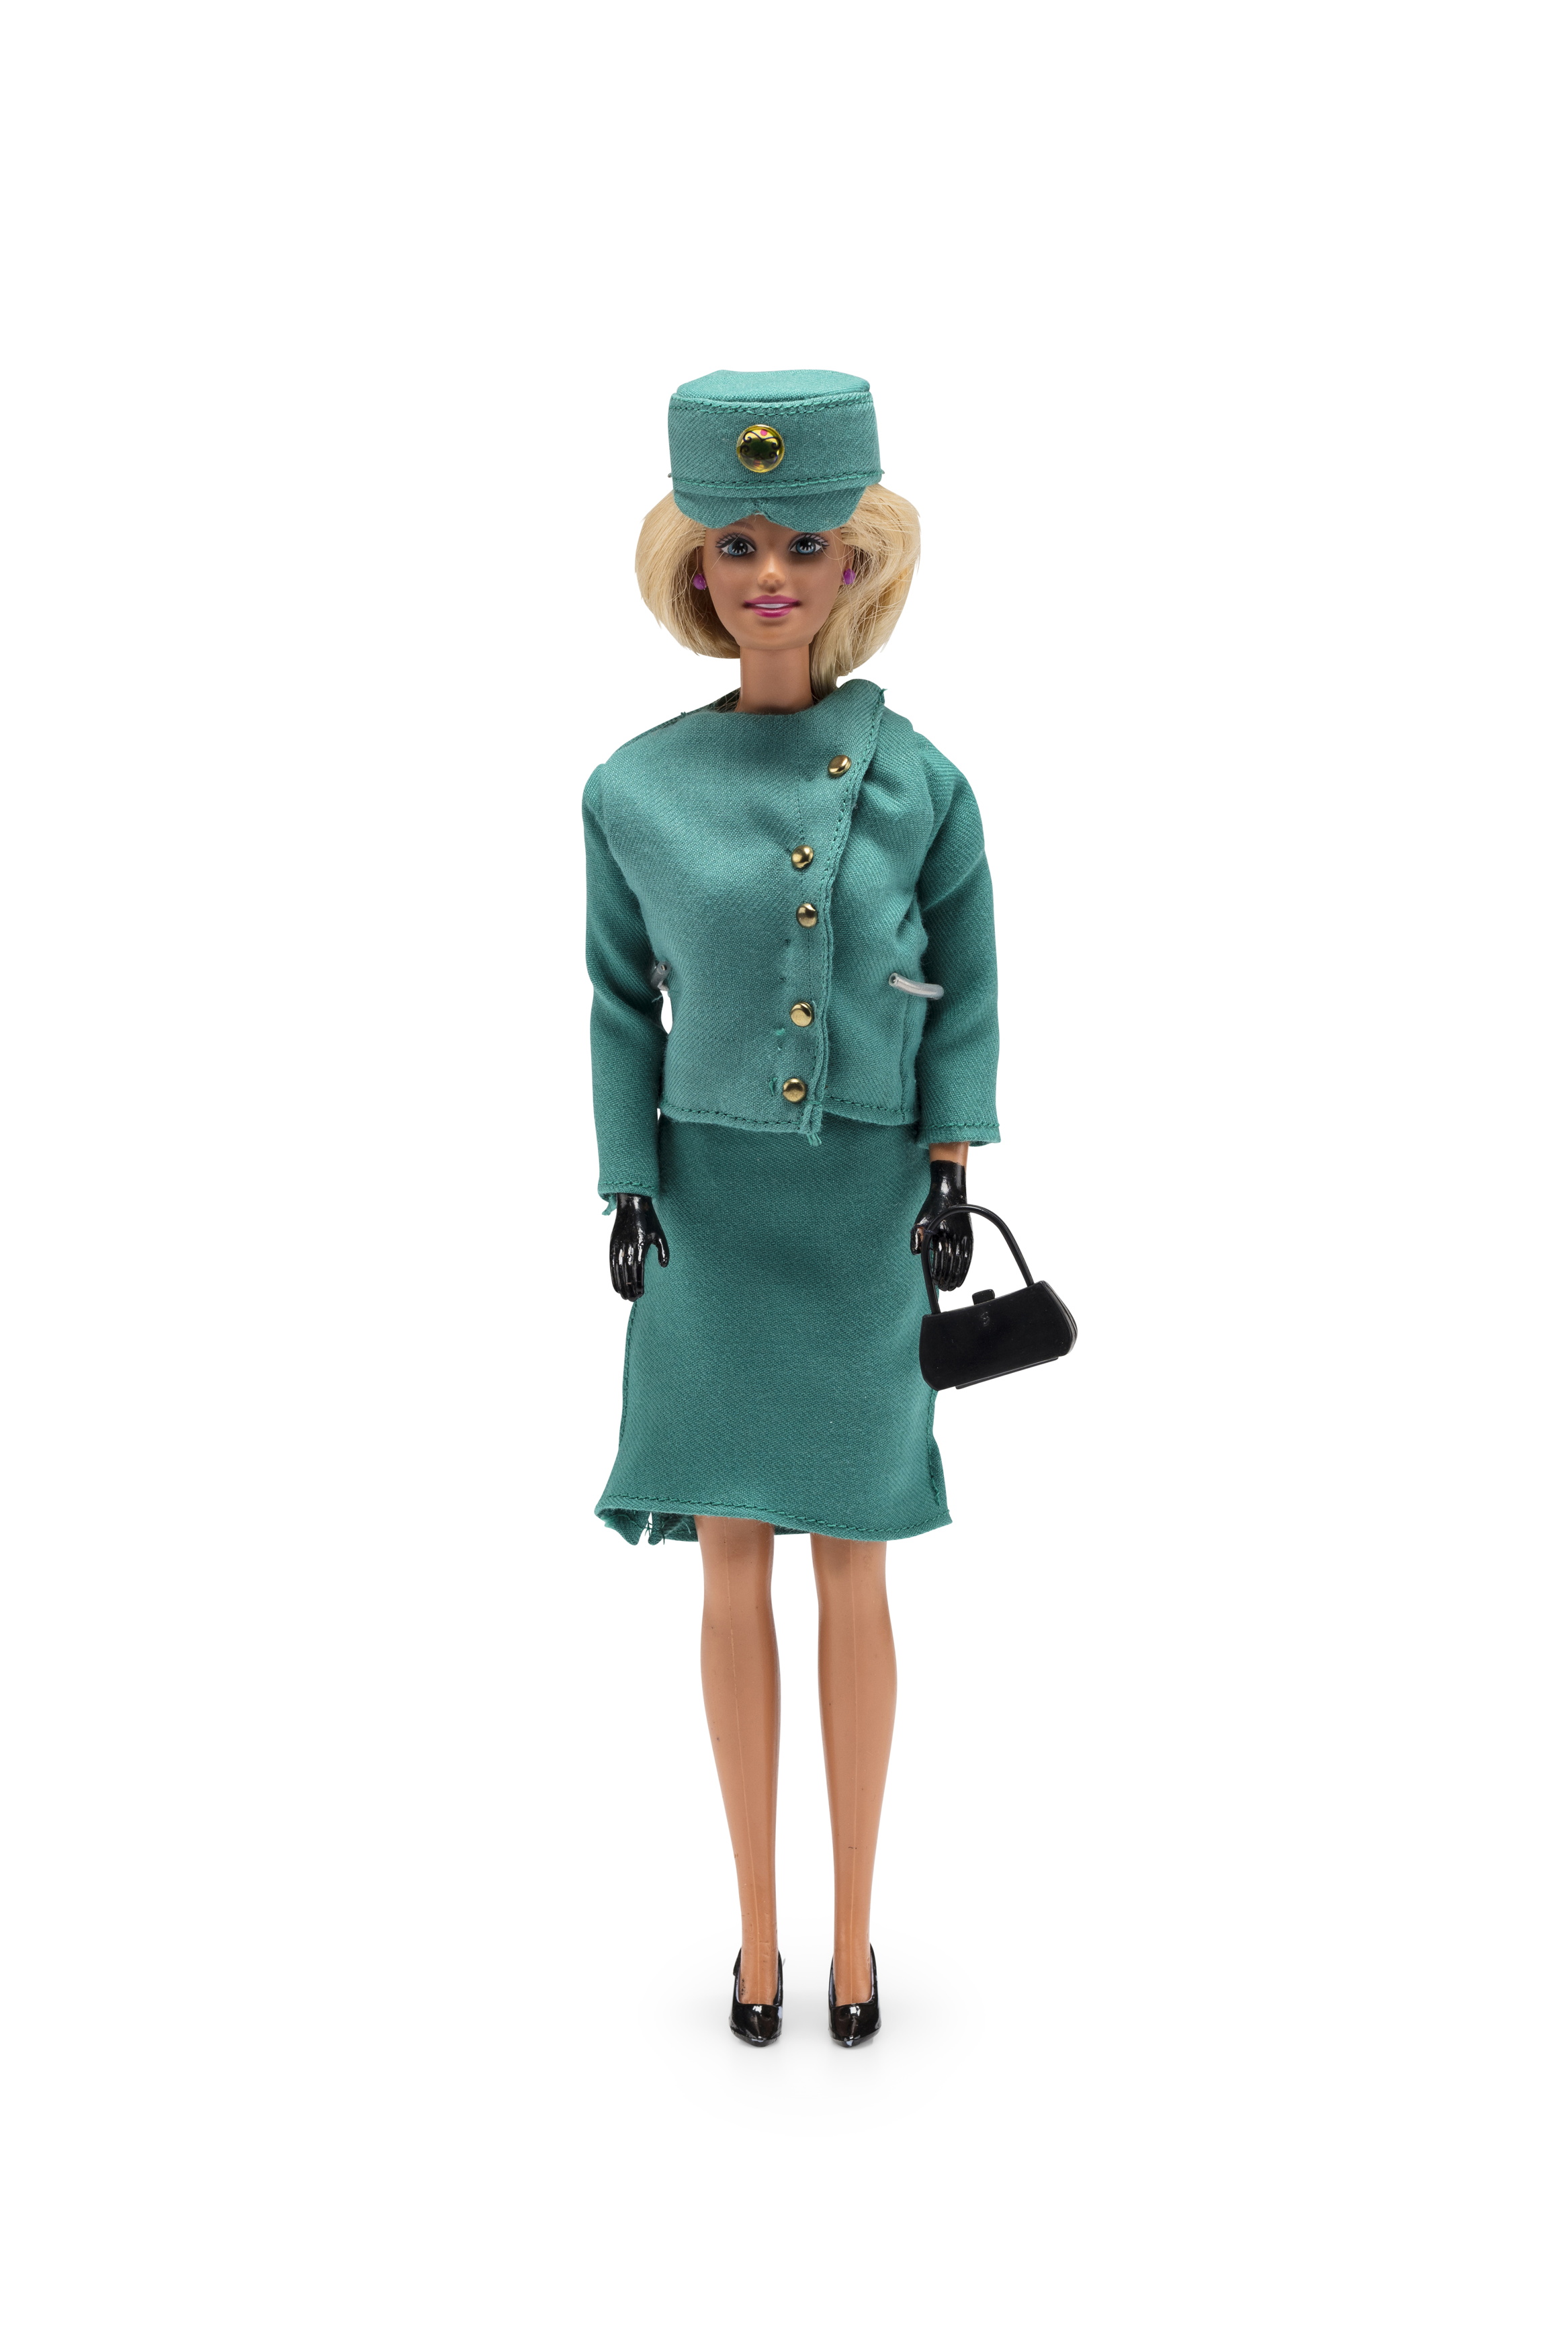 Barbie doll wearing Qantas uniform